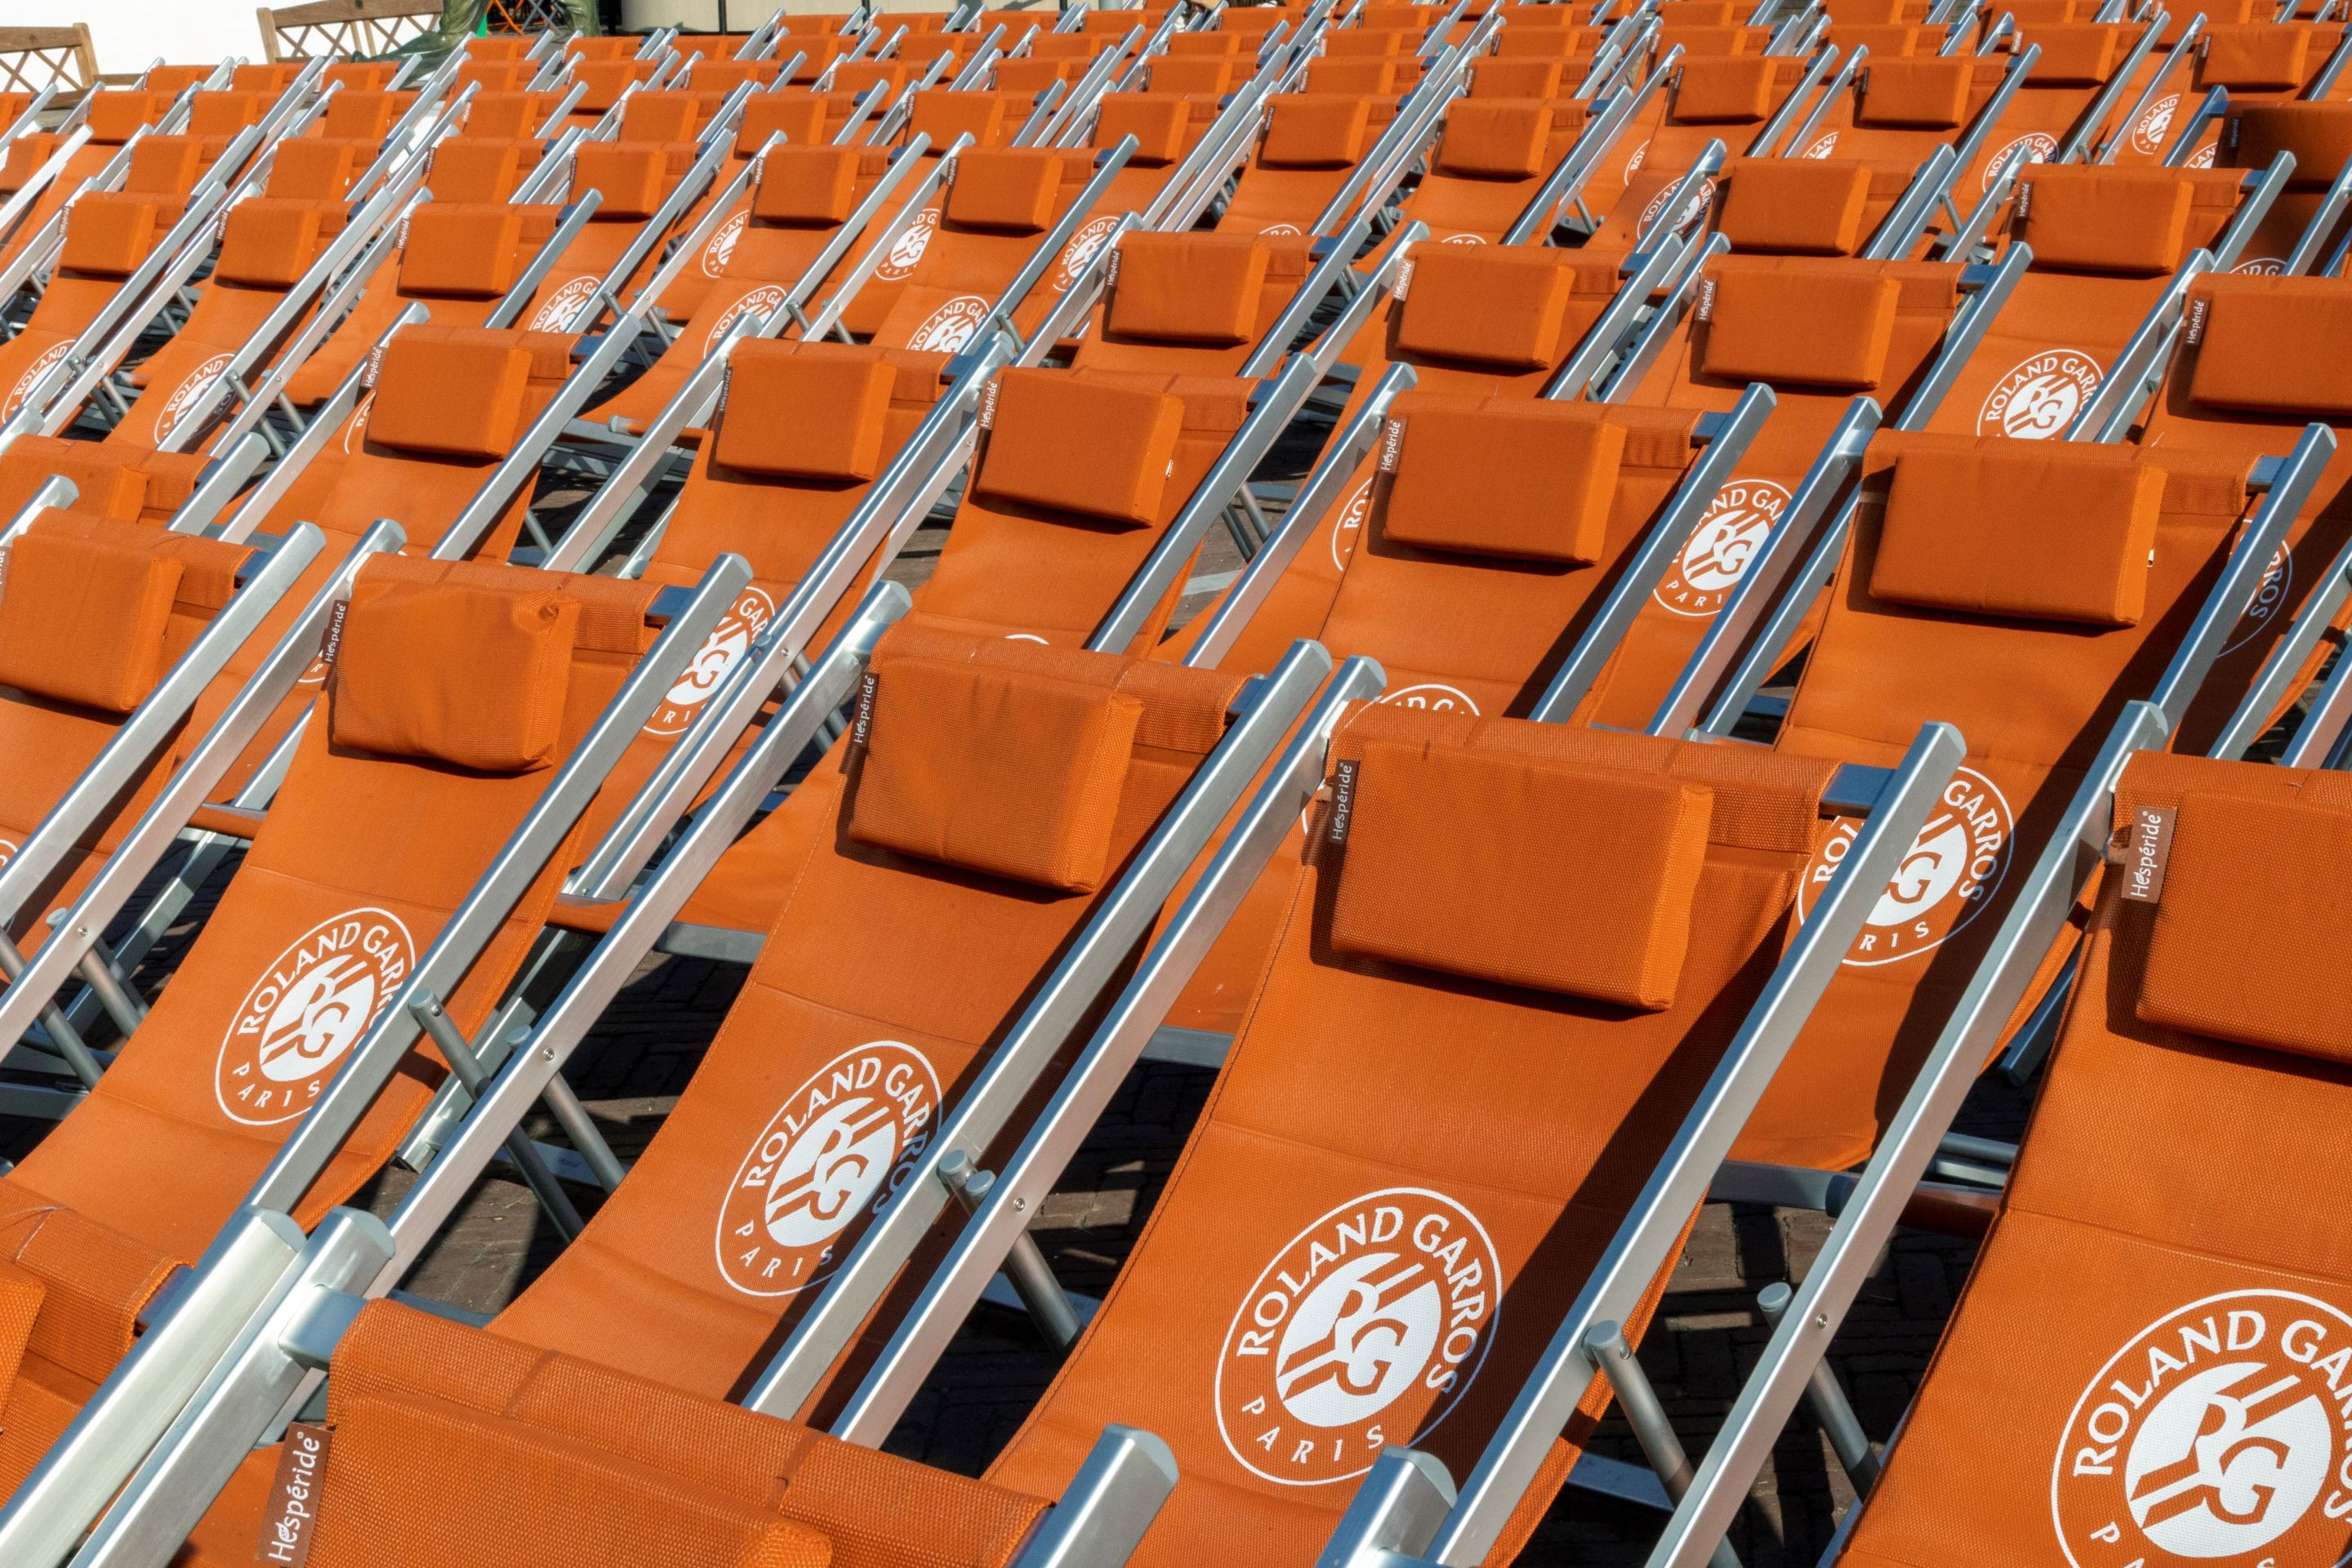 The seats at Roland-Garros